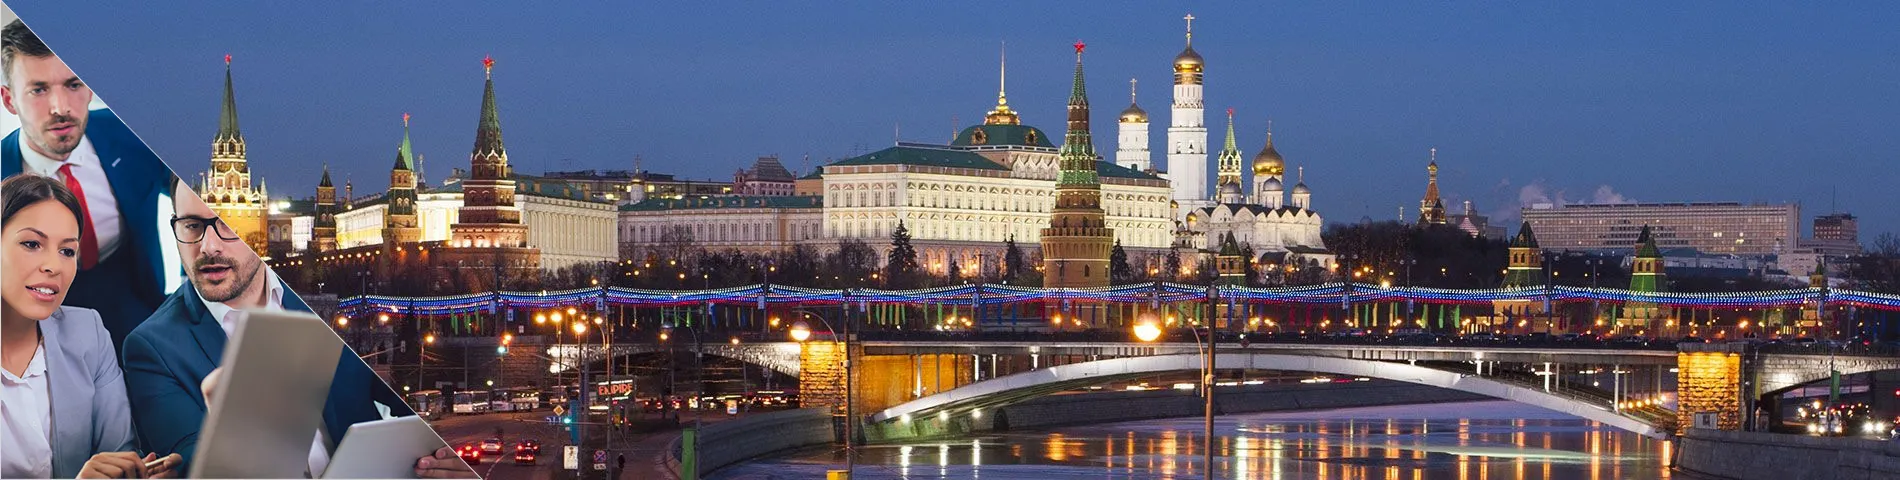 Moskova - Yhdistetty perus & business